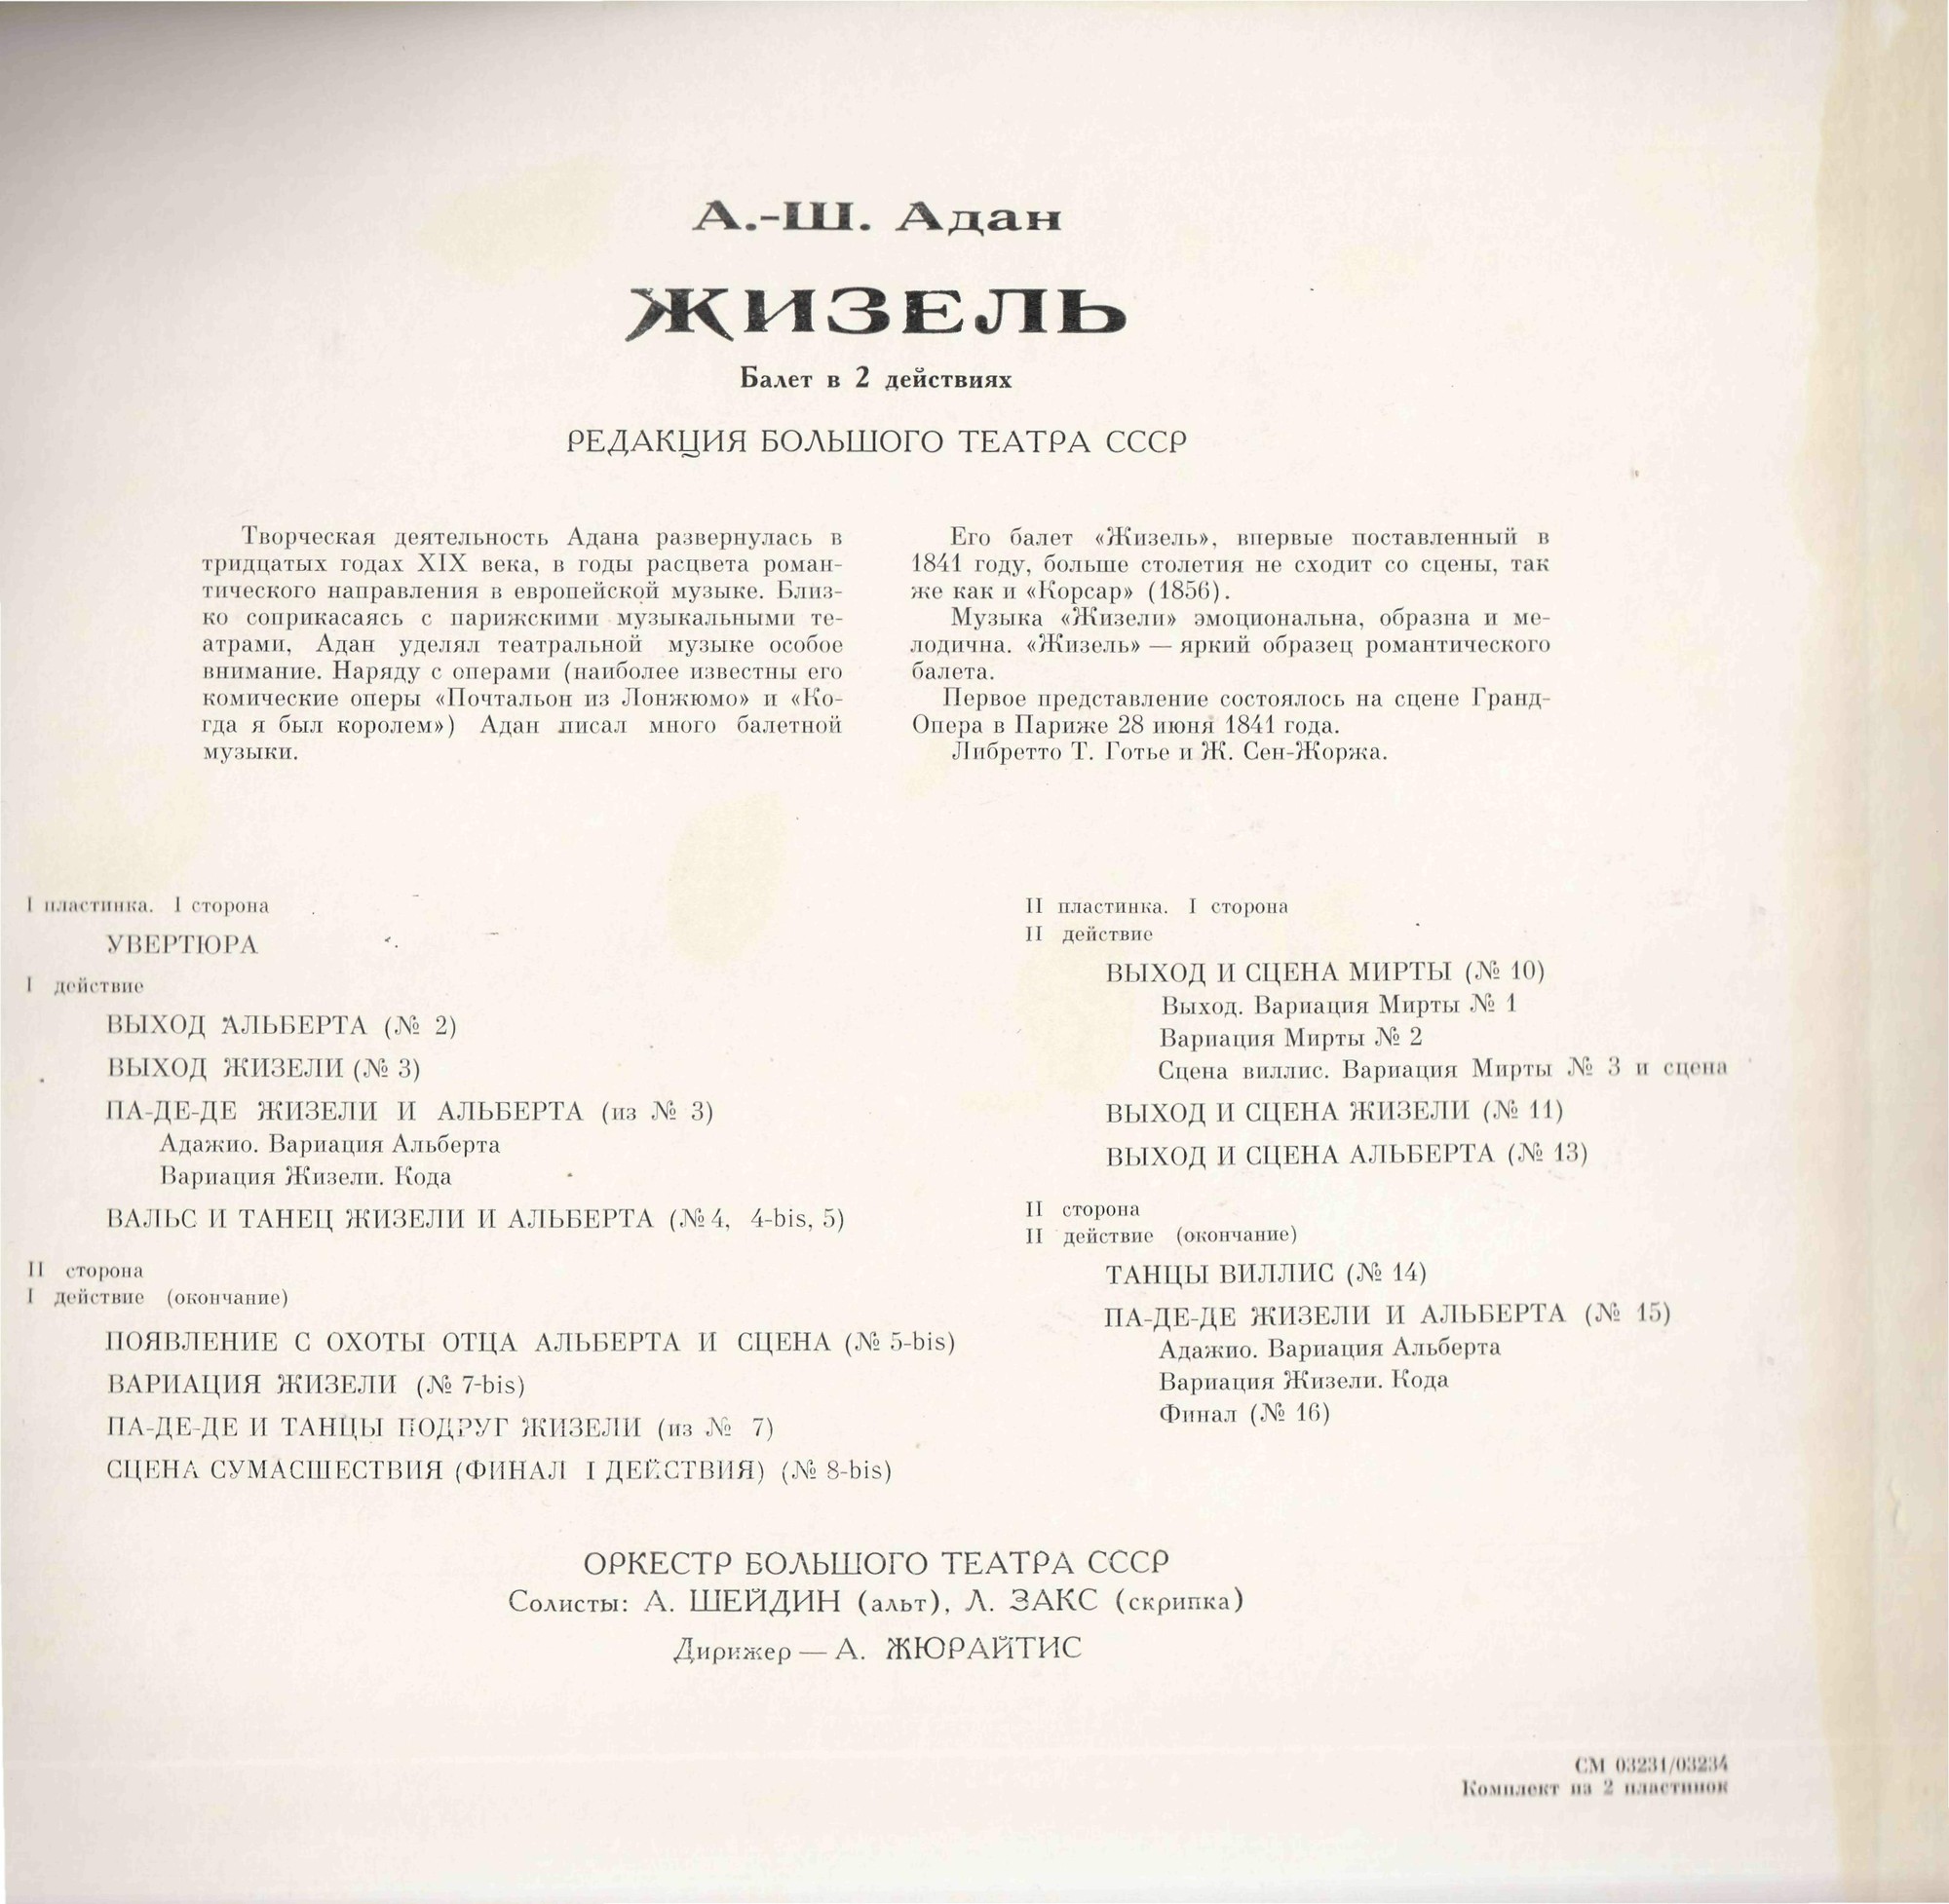 А. Ш. АДАН (1803–1856): «Жизель», балет в 2 д. (А. Жюрайтис)